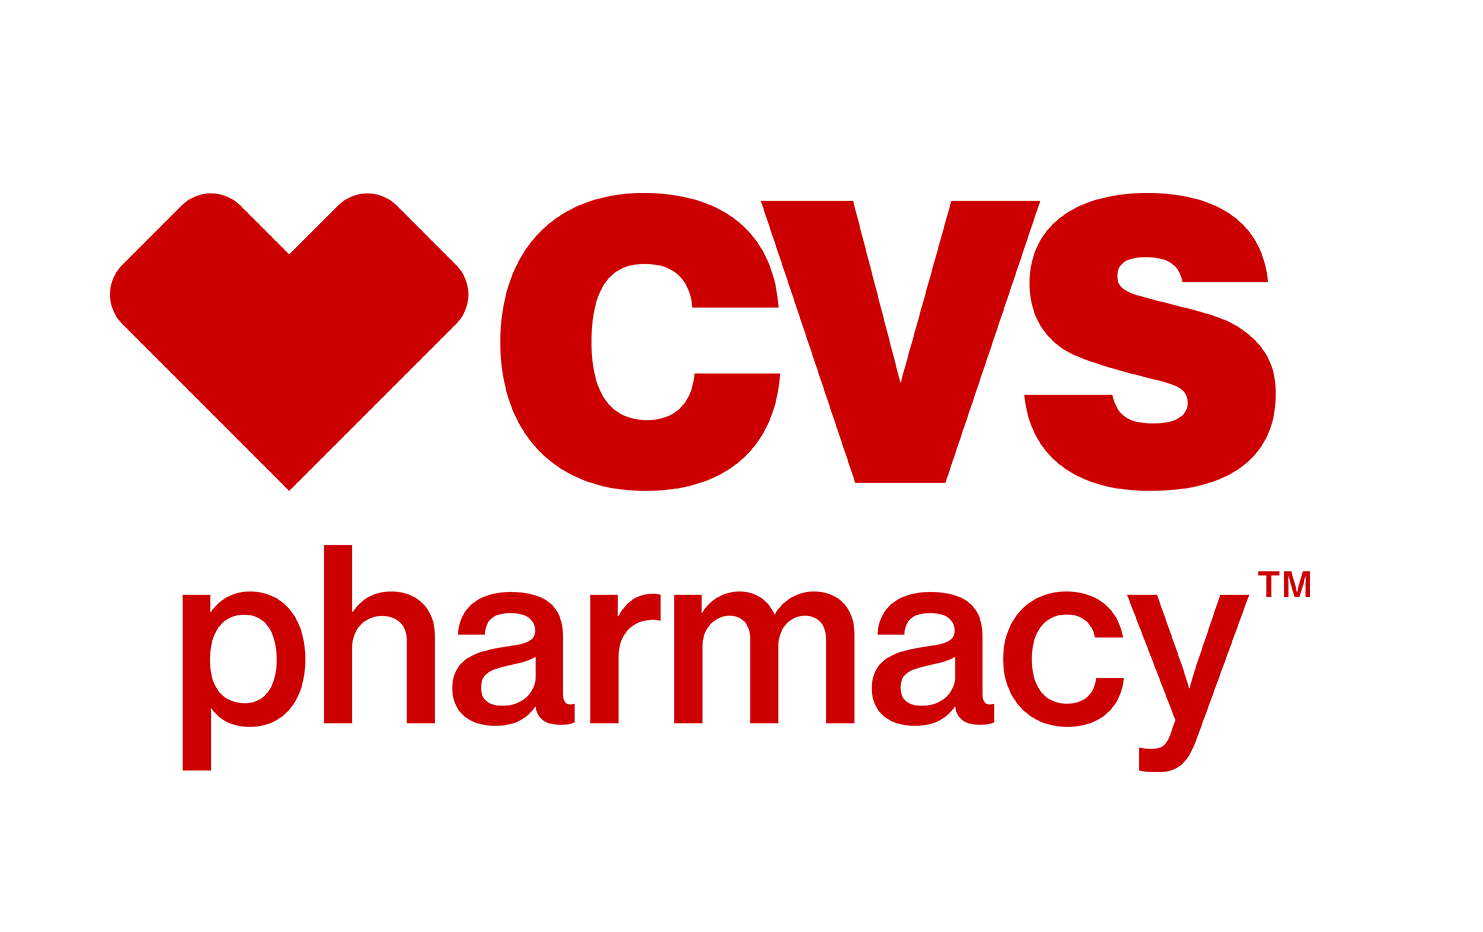 cvs pharmacy logo